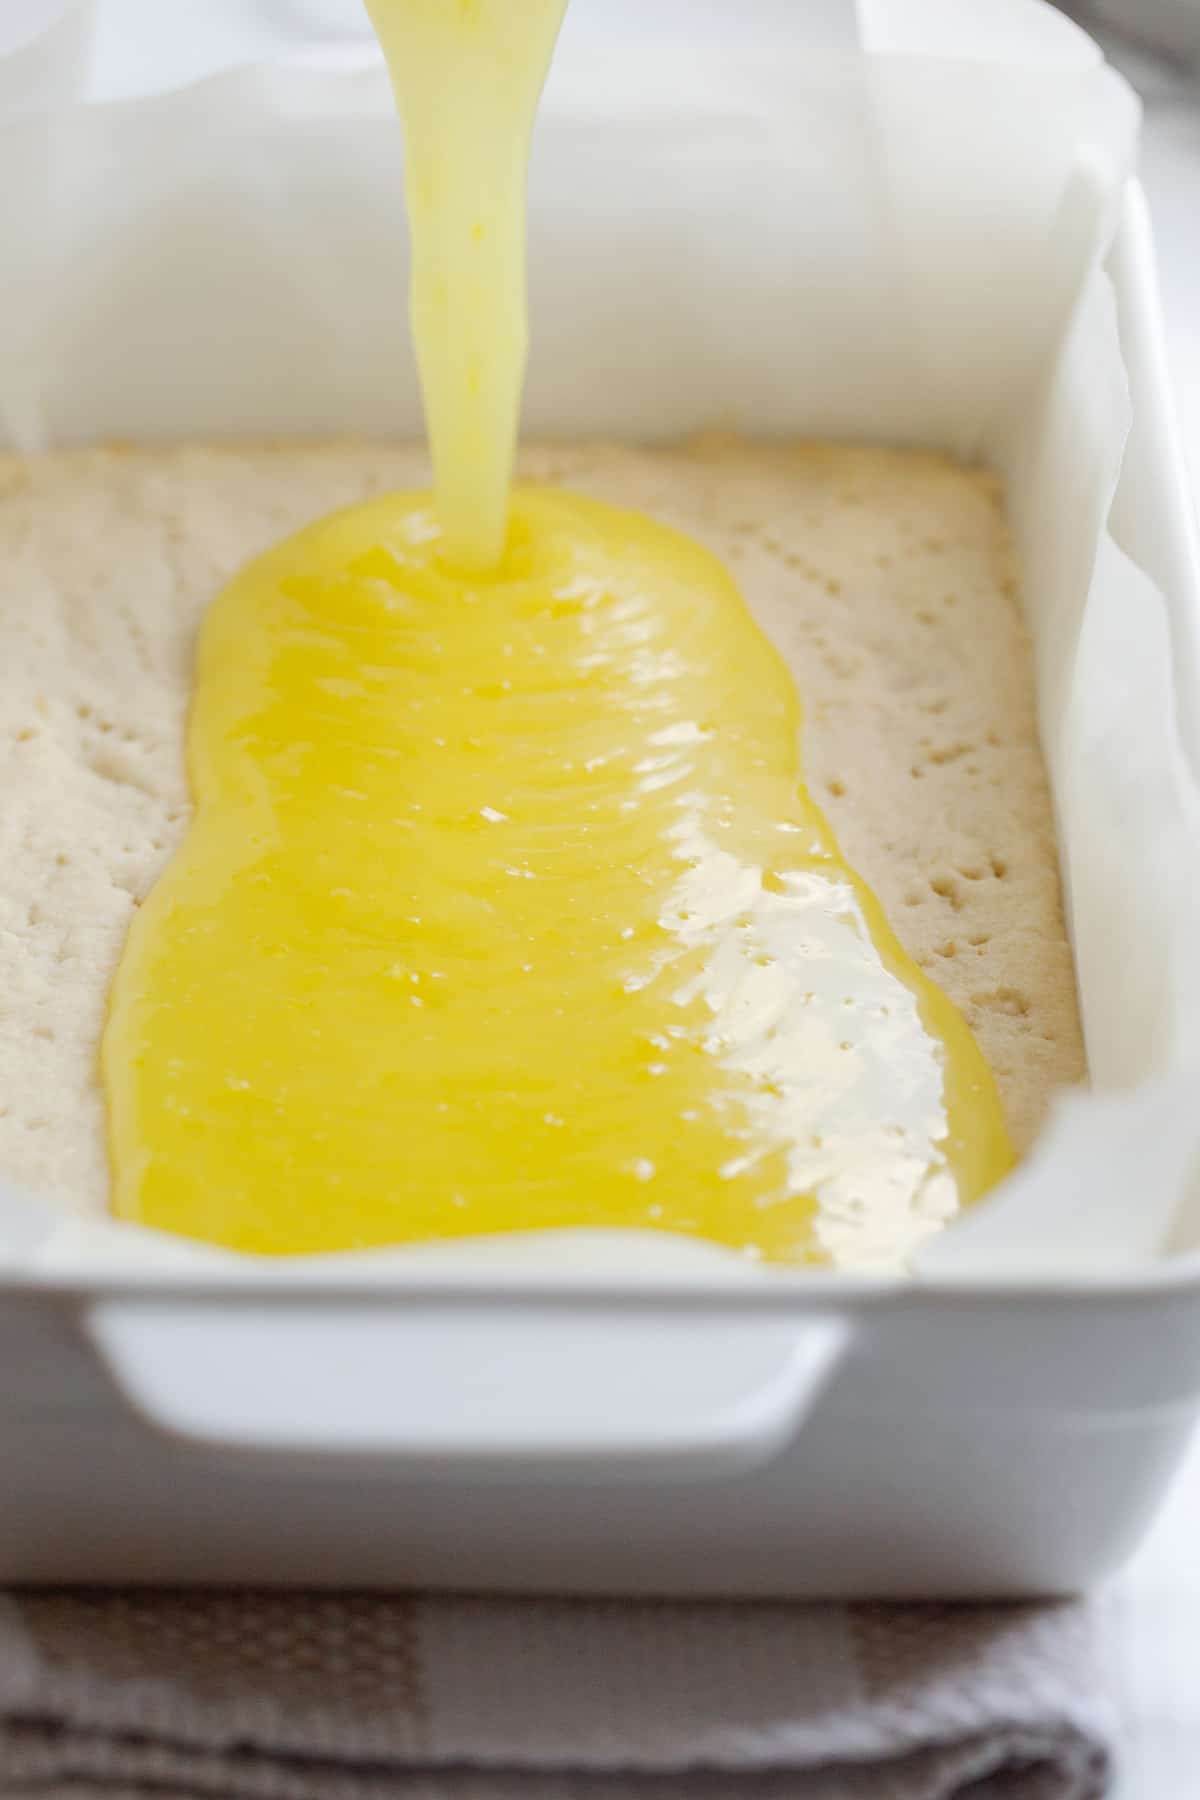 Pouring the lemon layer over the vegan shortbread crust.